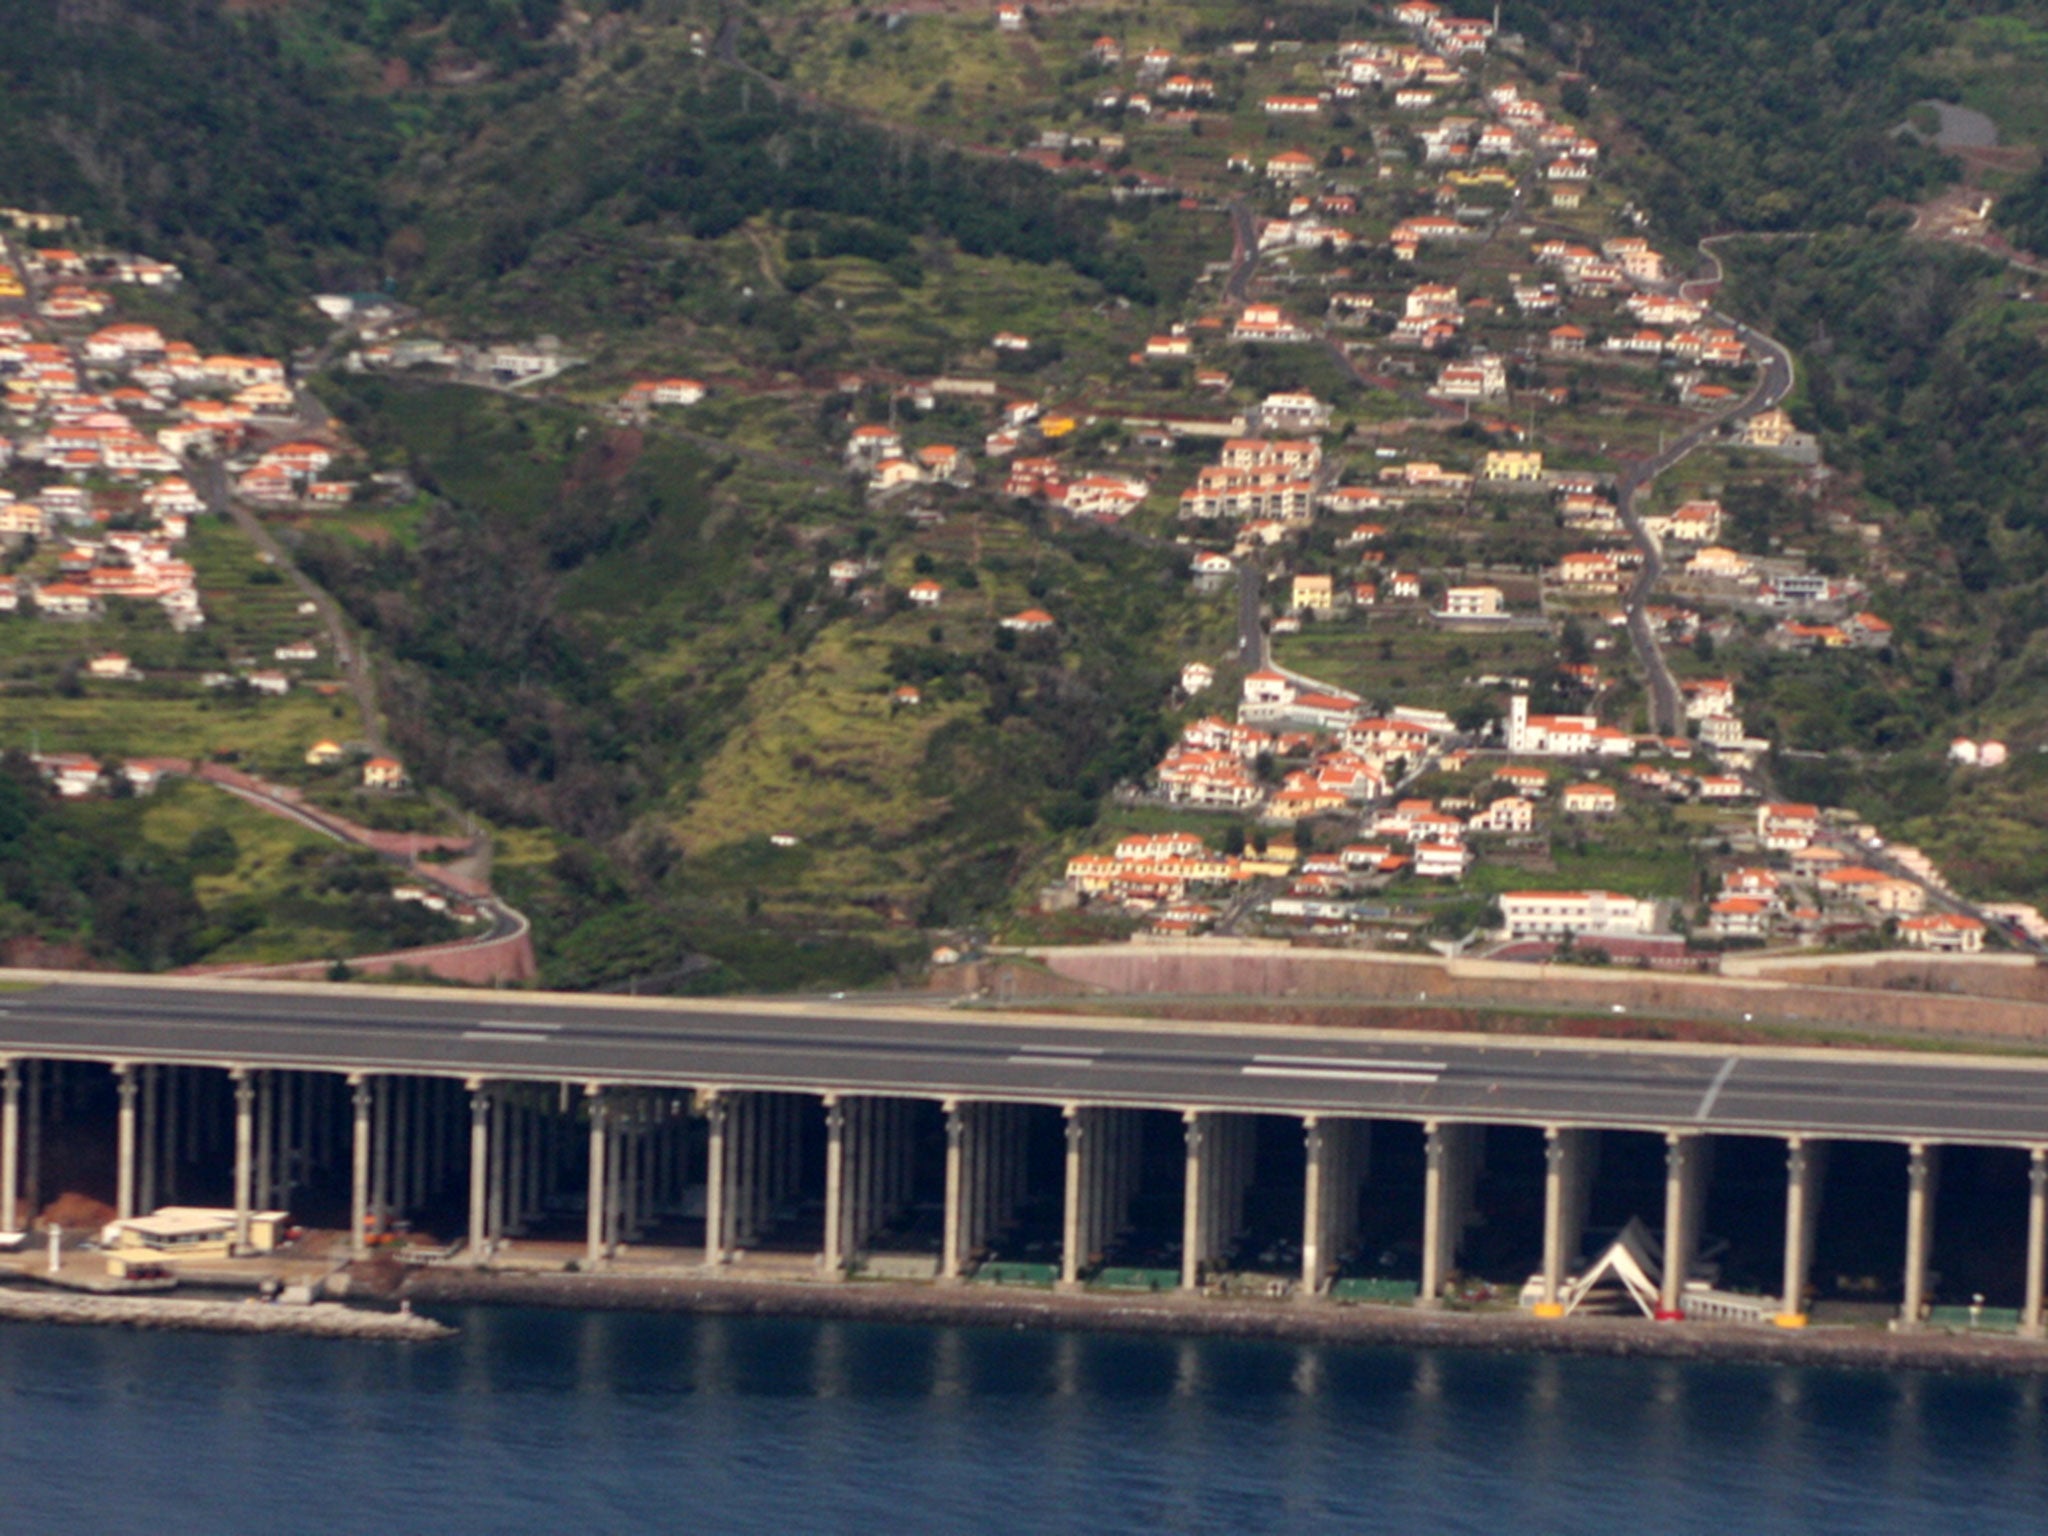 Runway at Madeira Airport. Photo: Jarle Vines (Creative Commons Attribution Sharealike 3.0)